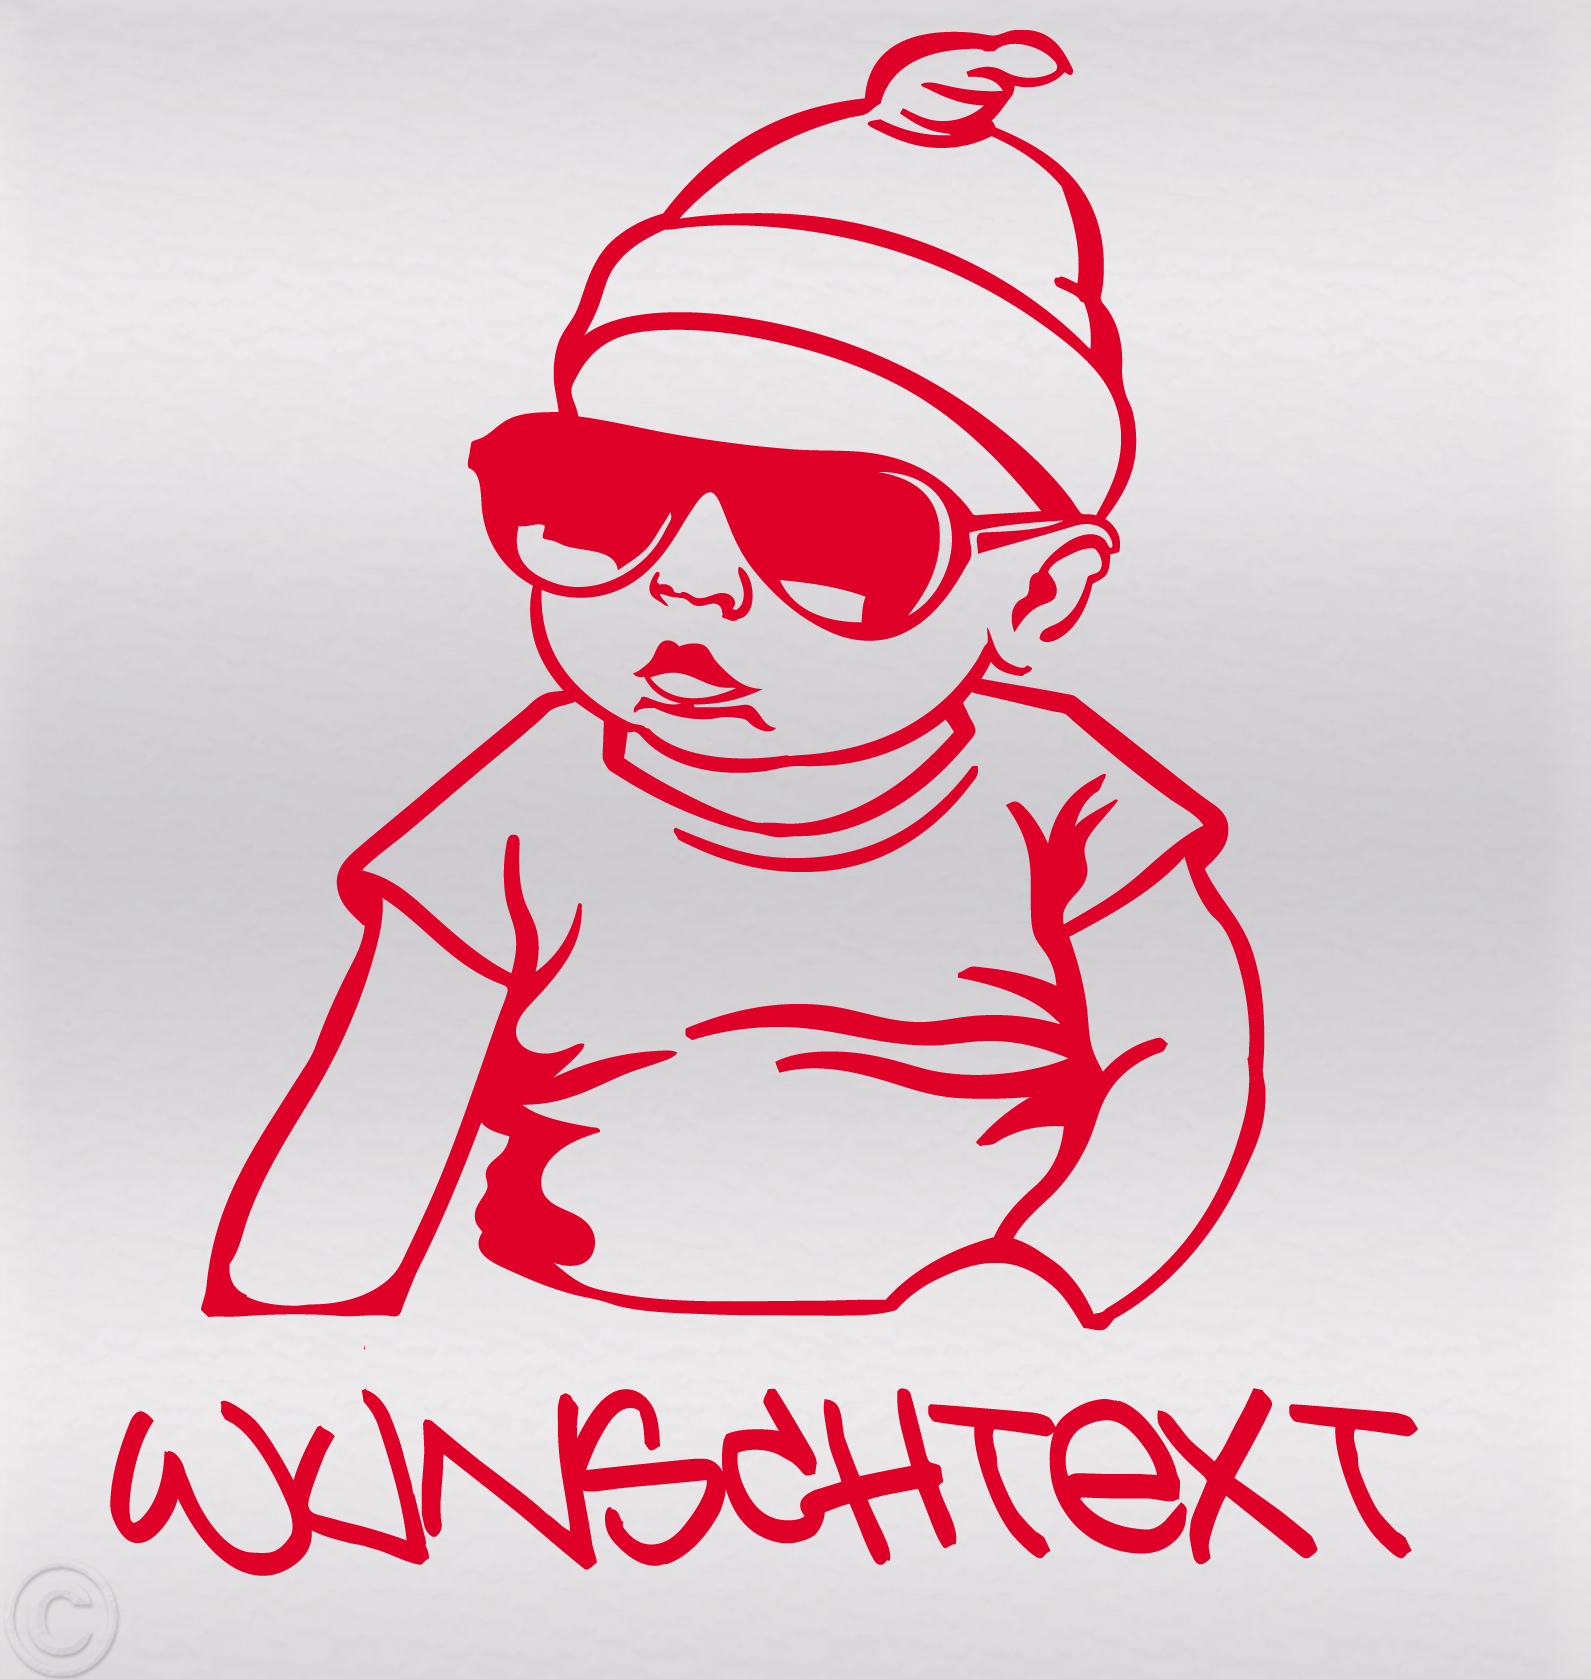 https://www.topdesignshop.de/images/product_images/original_images/hangover-baby-autoaufkleber-sticker.jpg